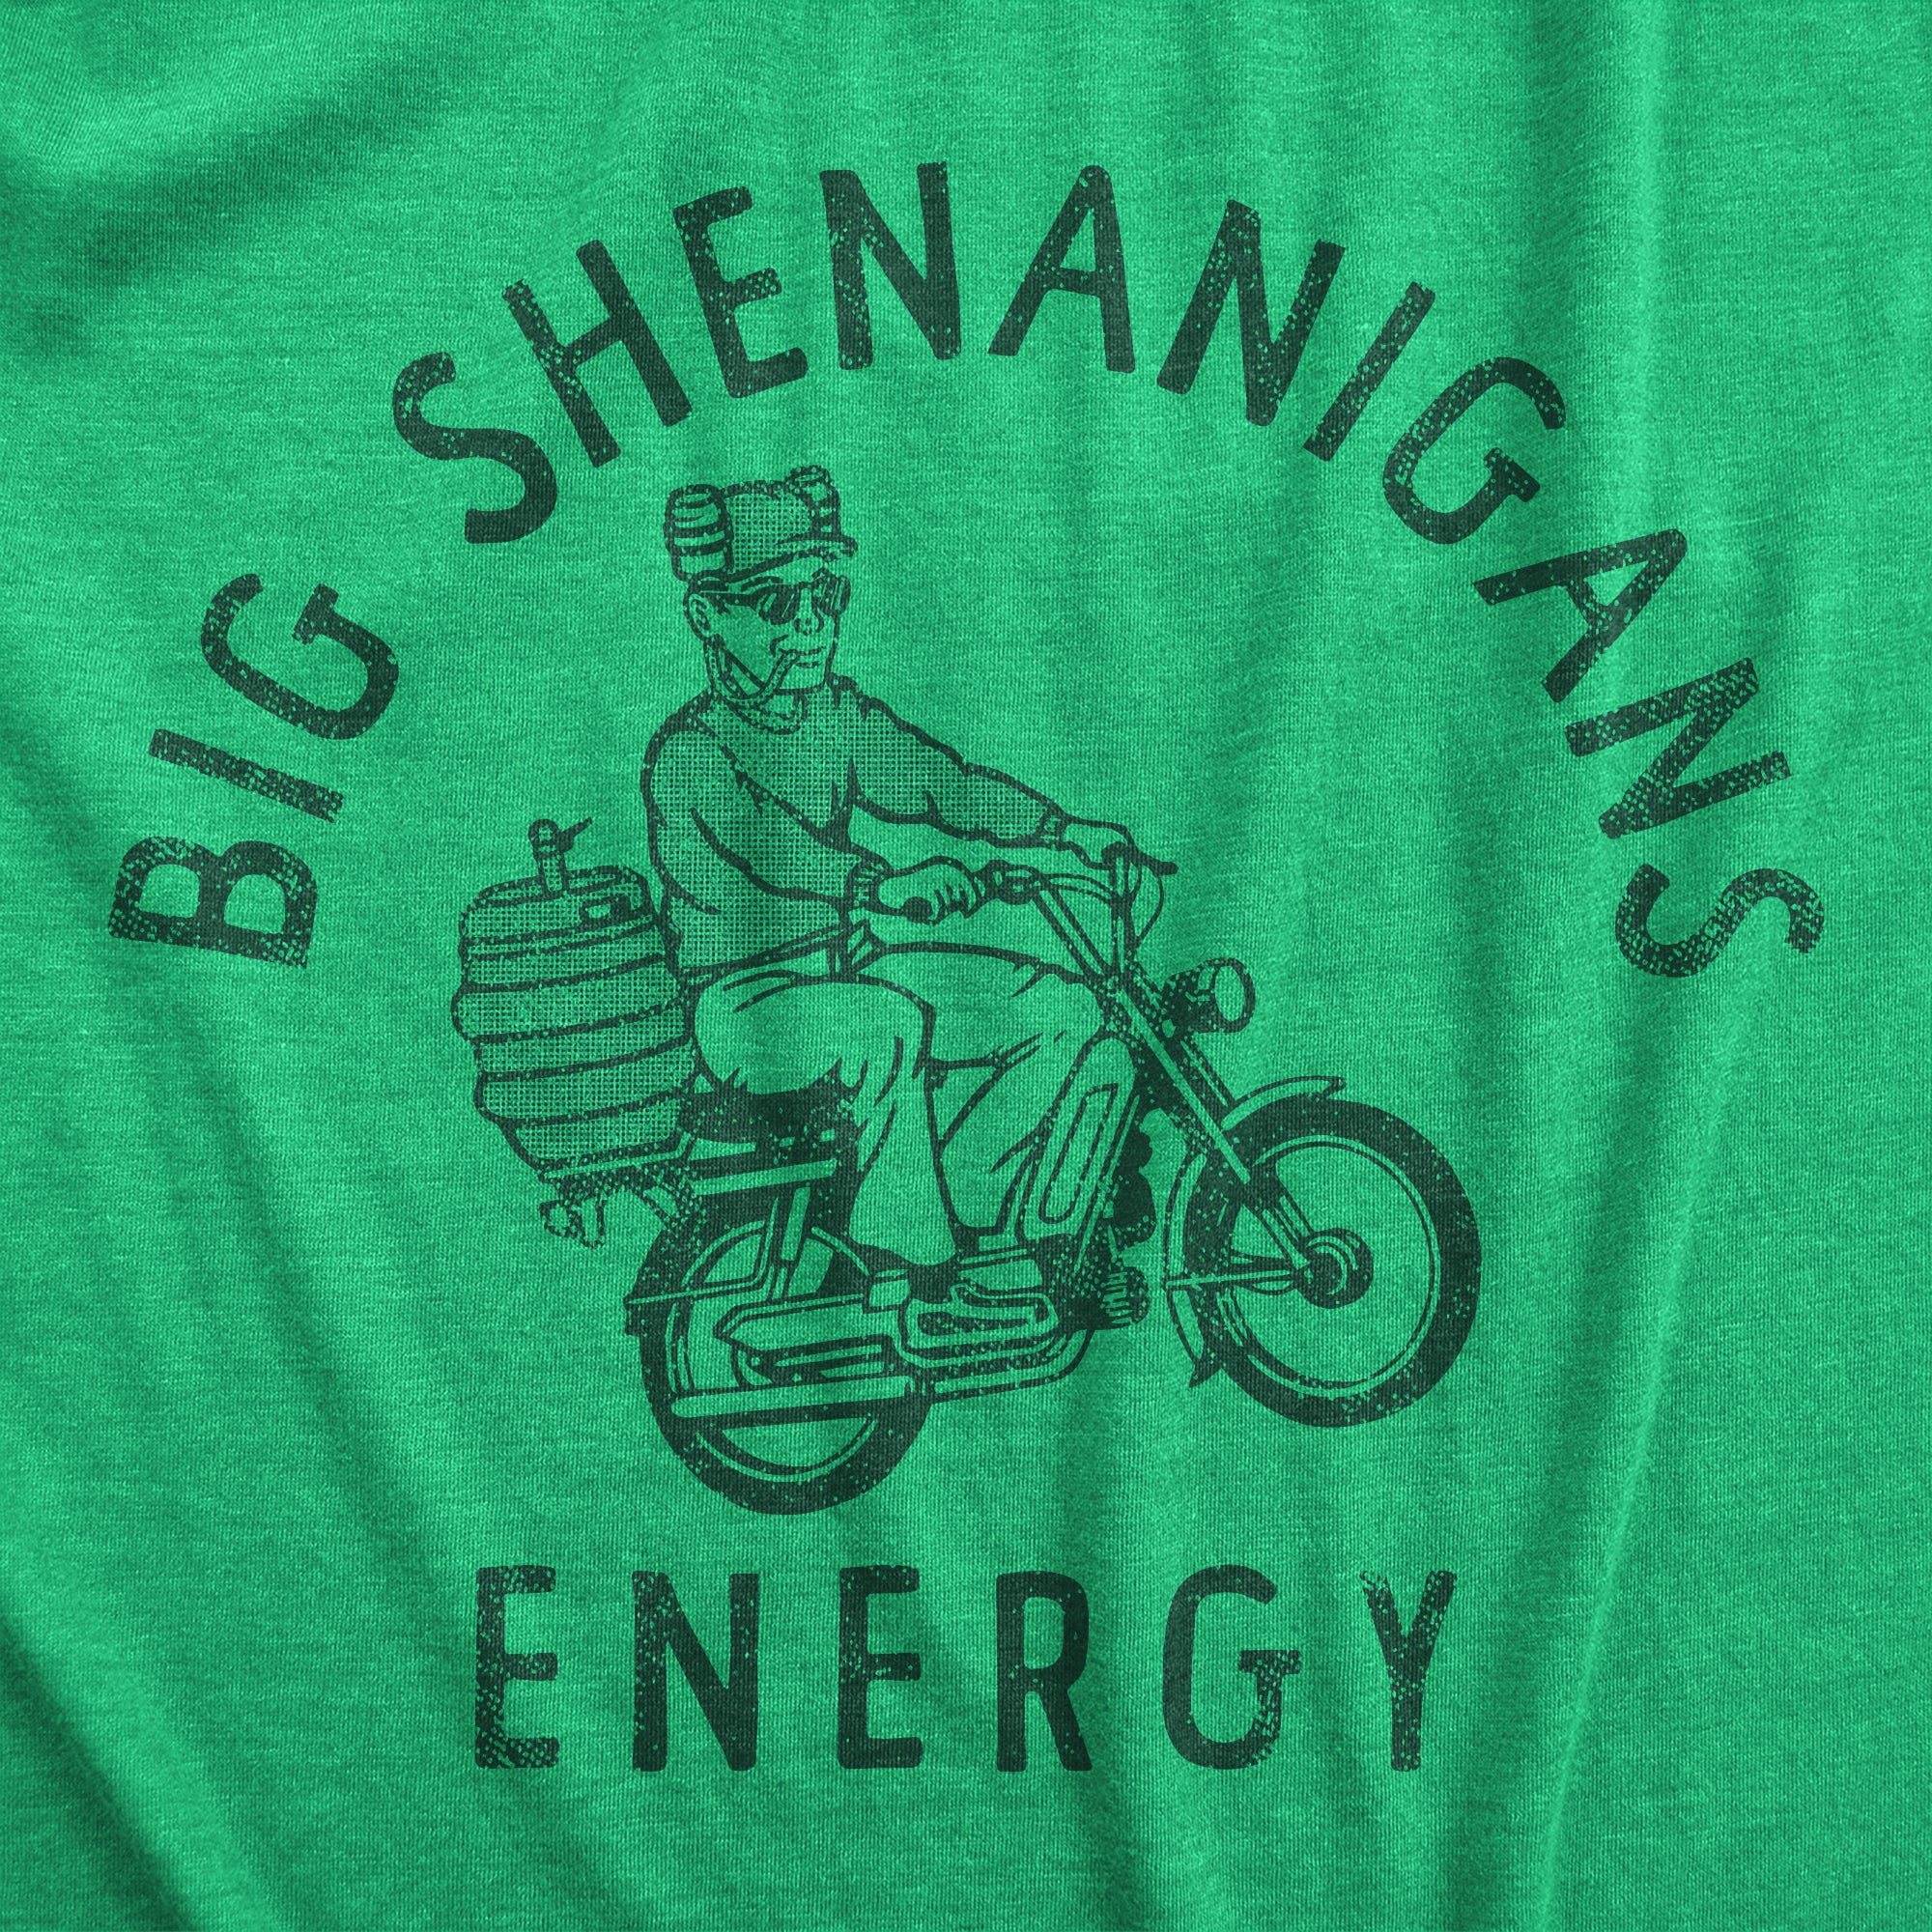 Funny Heather Green - ENERGY Big Shenanigans Energy Mens T Shirt Nerdy Saint Patrick's Day Drinking Tee